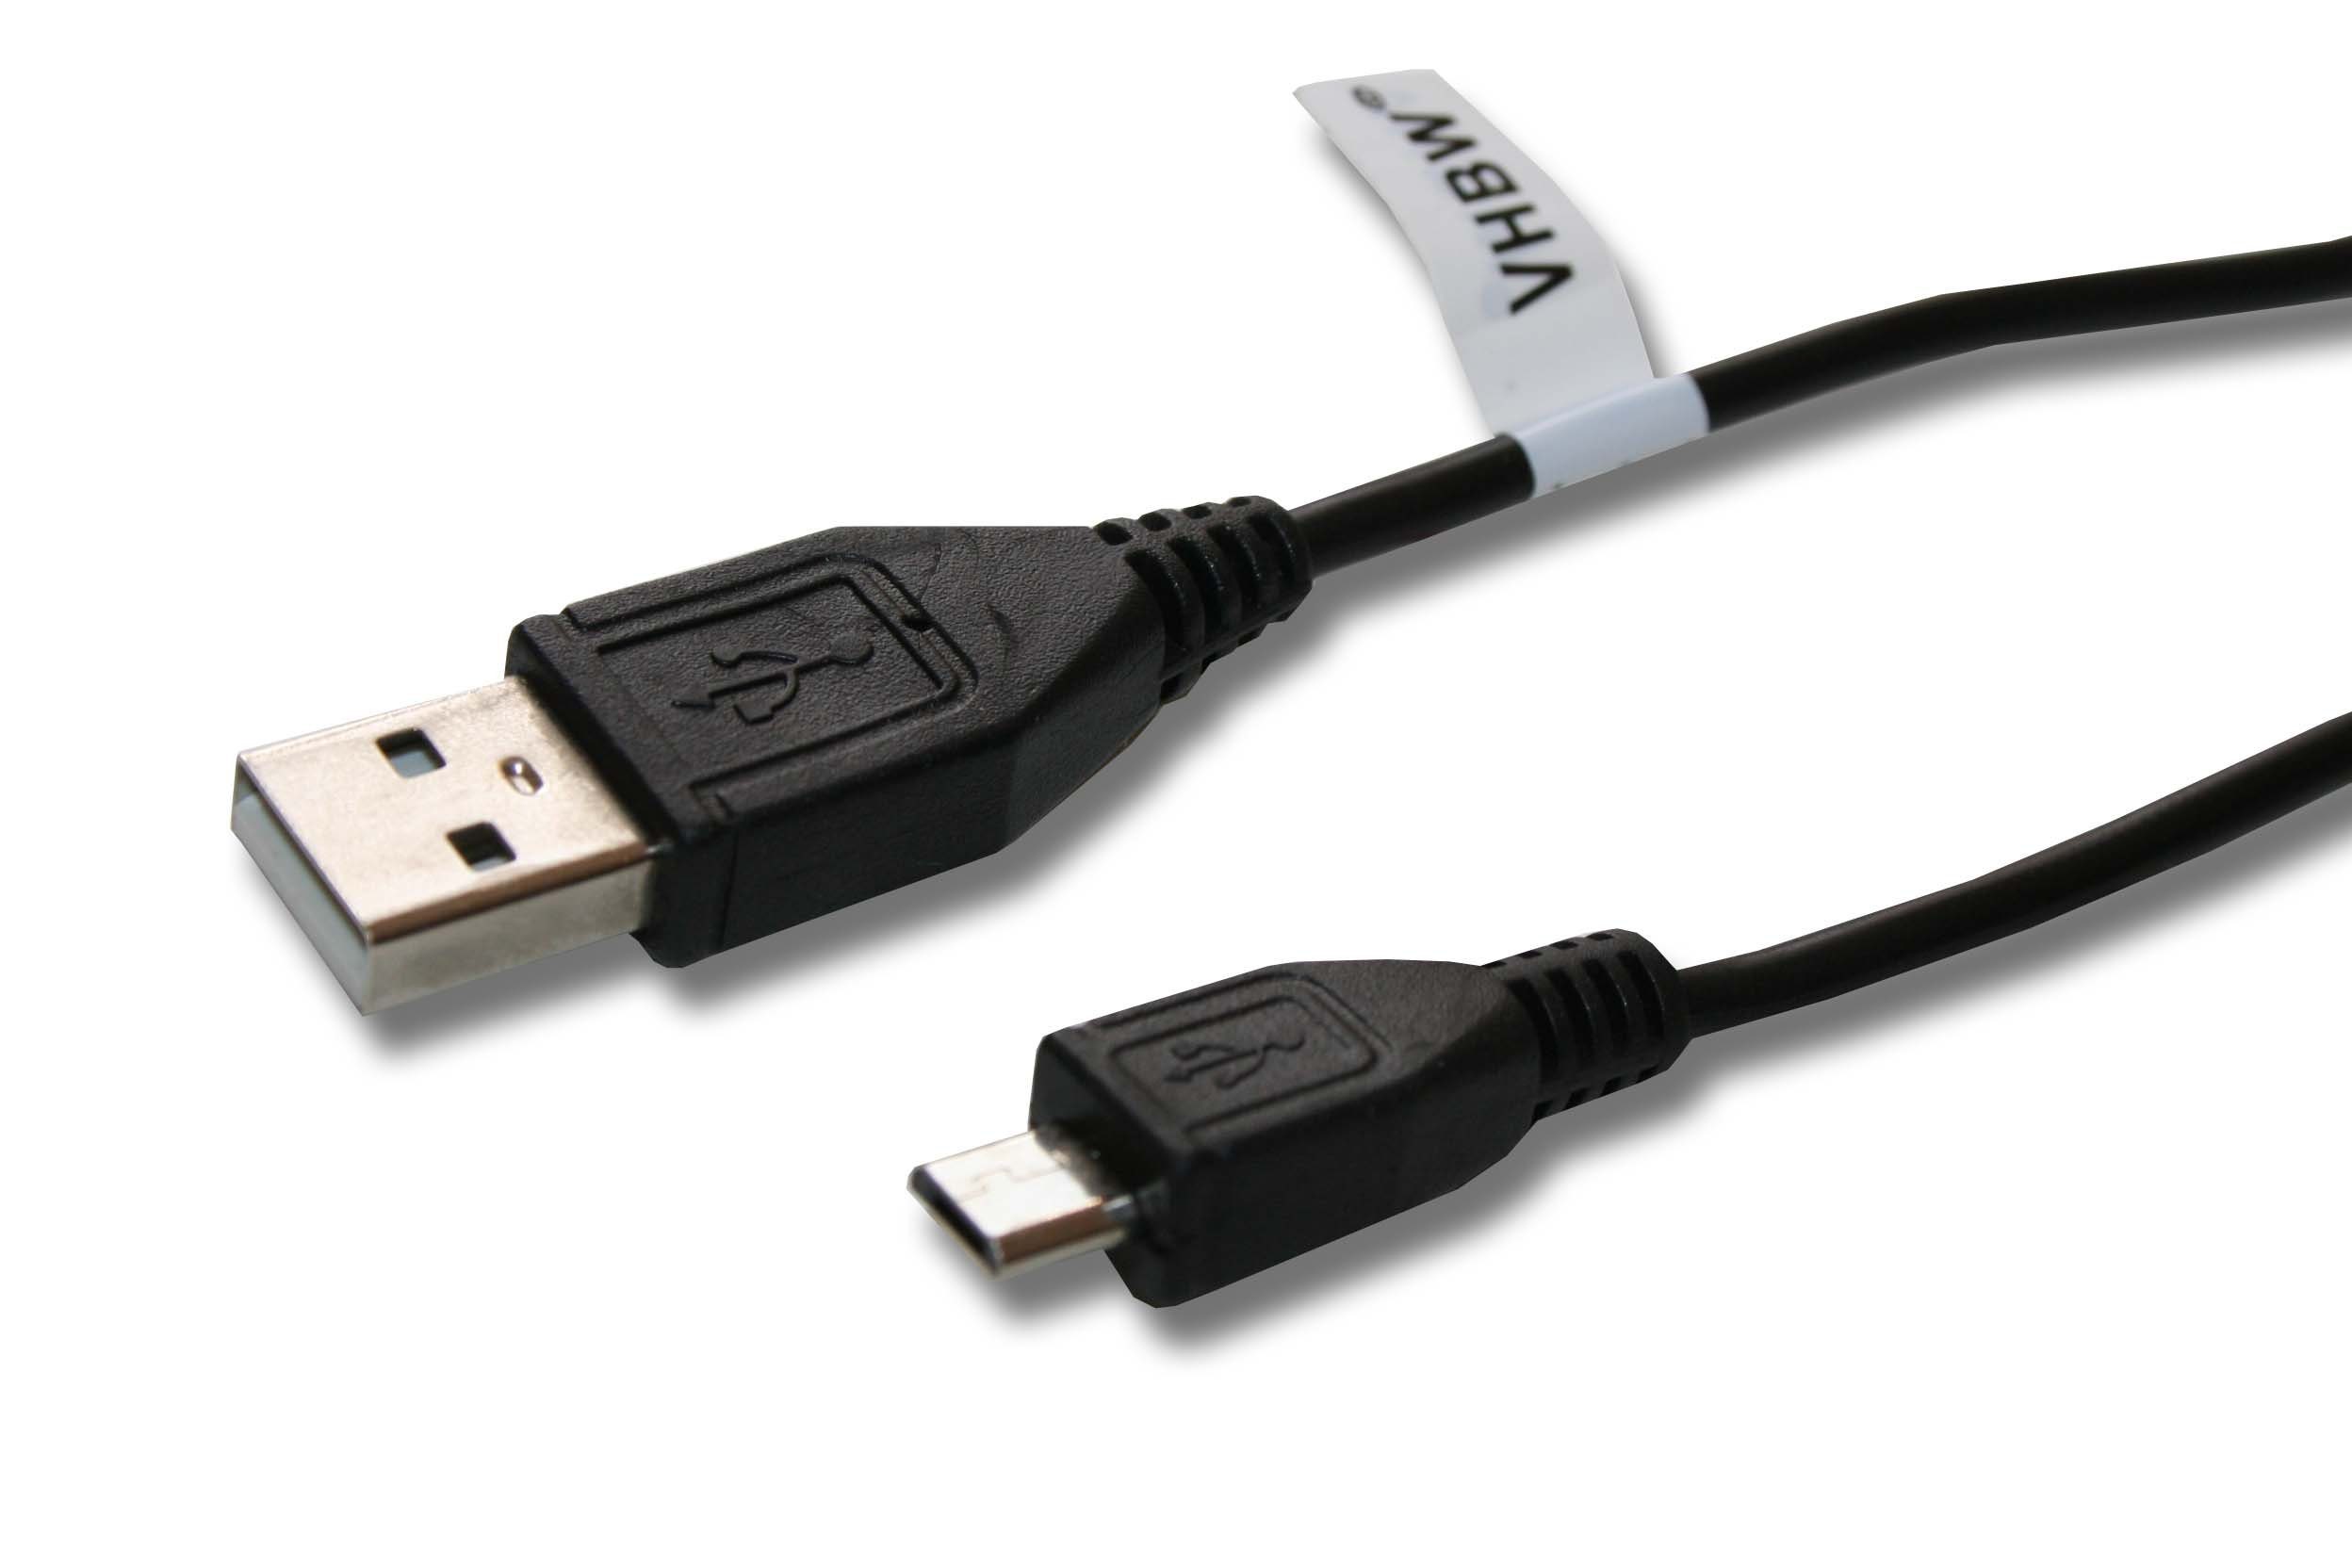 vhbw USB-Kabel, Micro-USB, passend für Sony HDR-CX455, HDR-CX485, HDR-CX675, HDR-CX450, HDR-CX625 Kamera